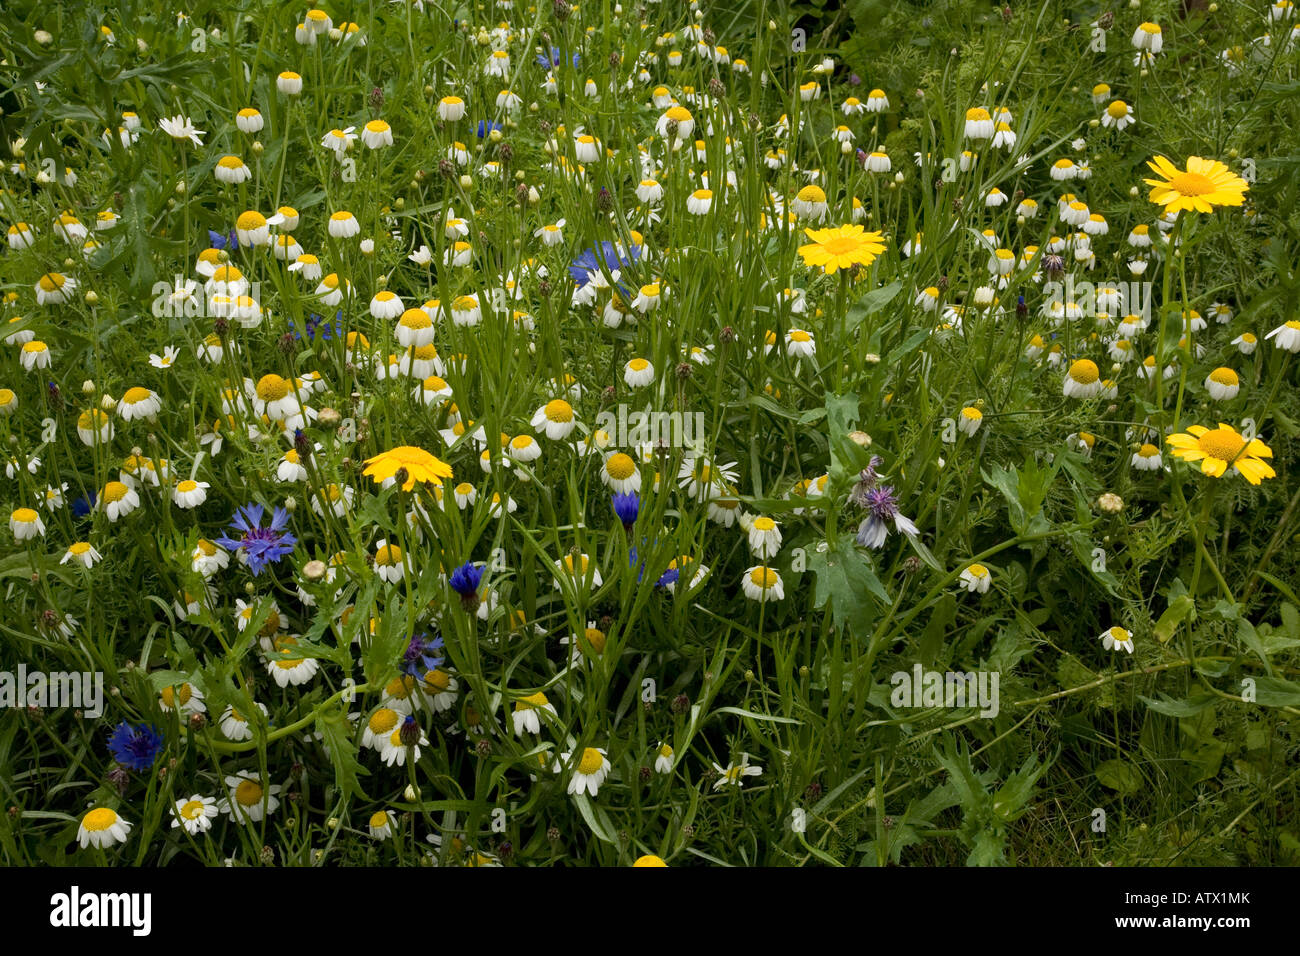 Maisfeld Unkraut Grenze in Tierwelt Garten Dorset mit Ringelblumen Klatschmohn etc. Stockfoto